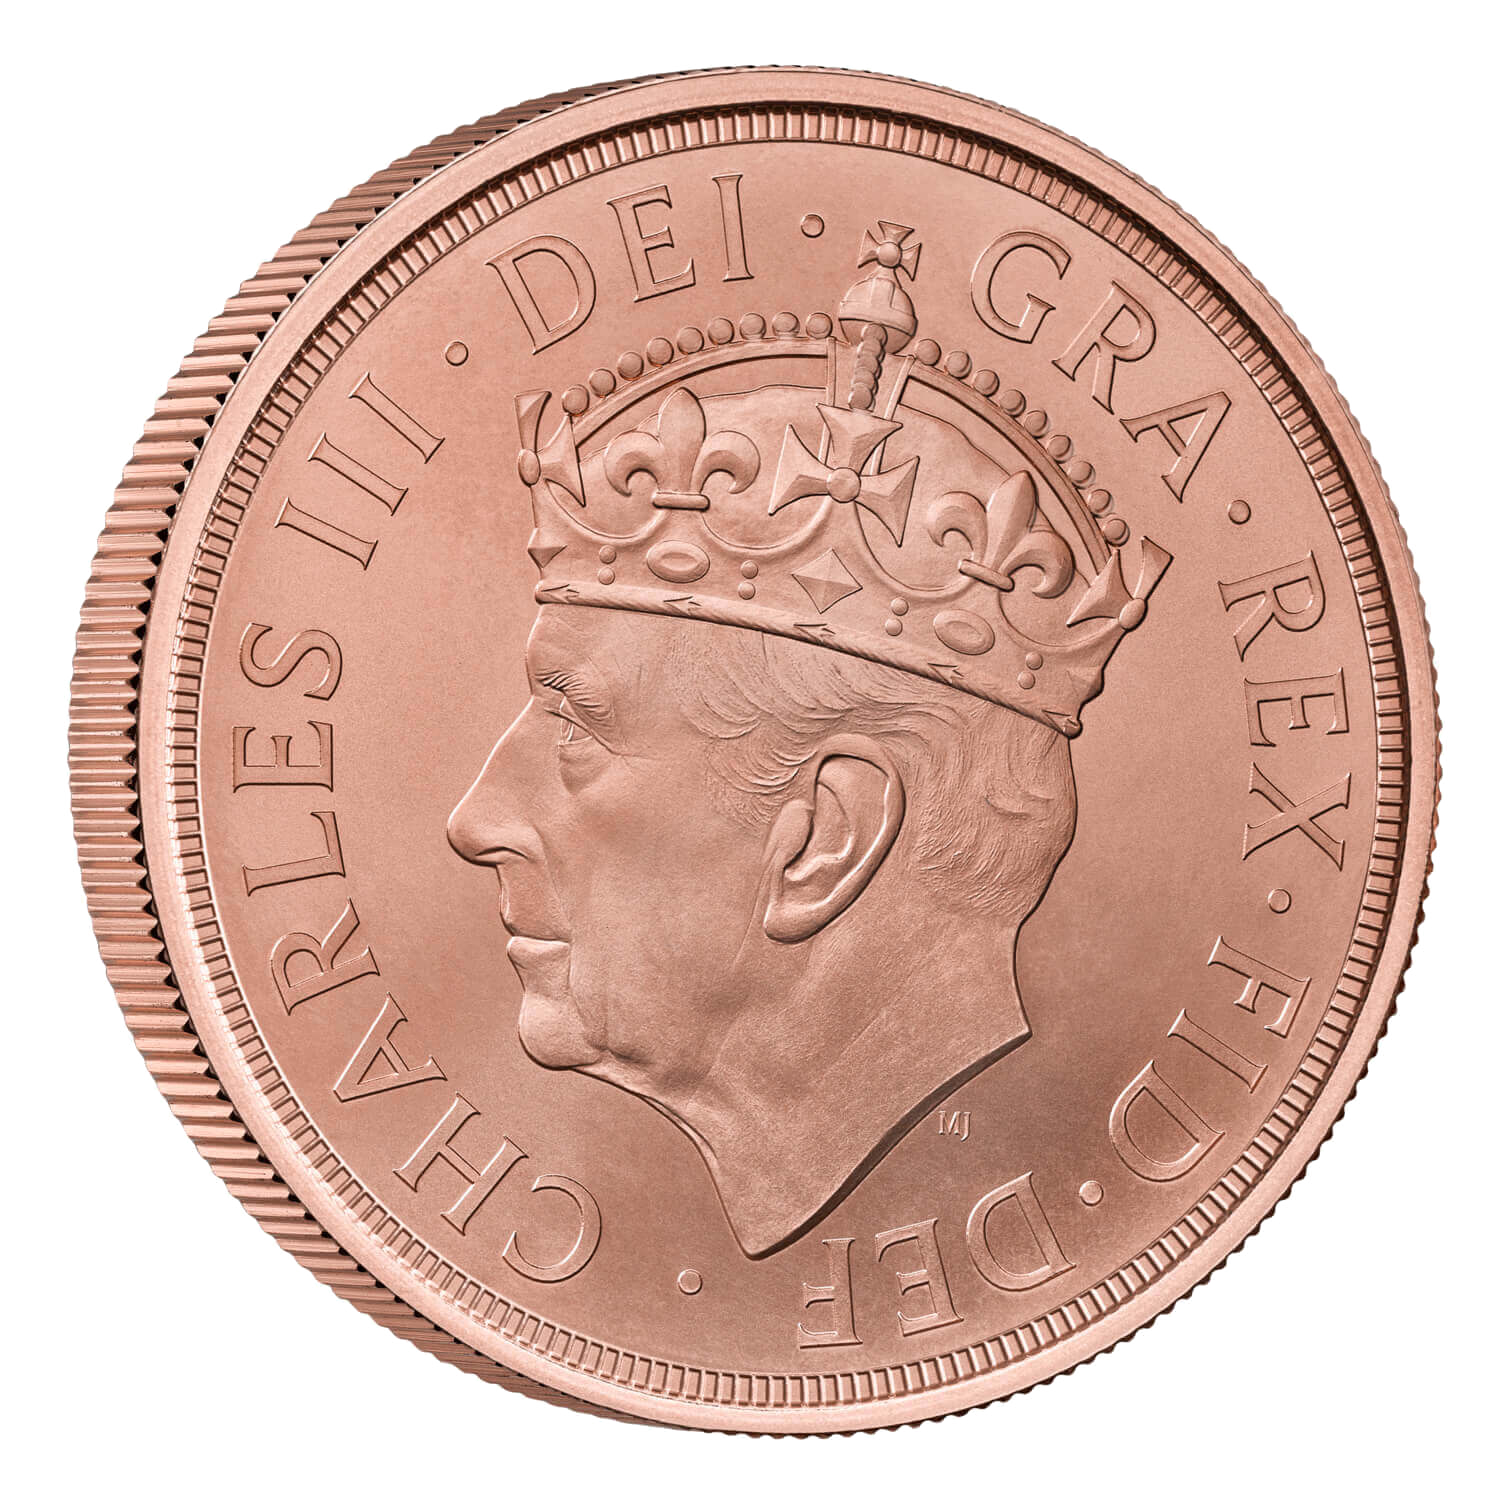 2023 King Charles III British Gold Coronation 5 Pound Sovereign BU